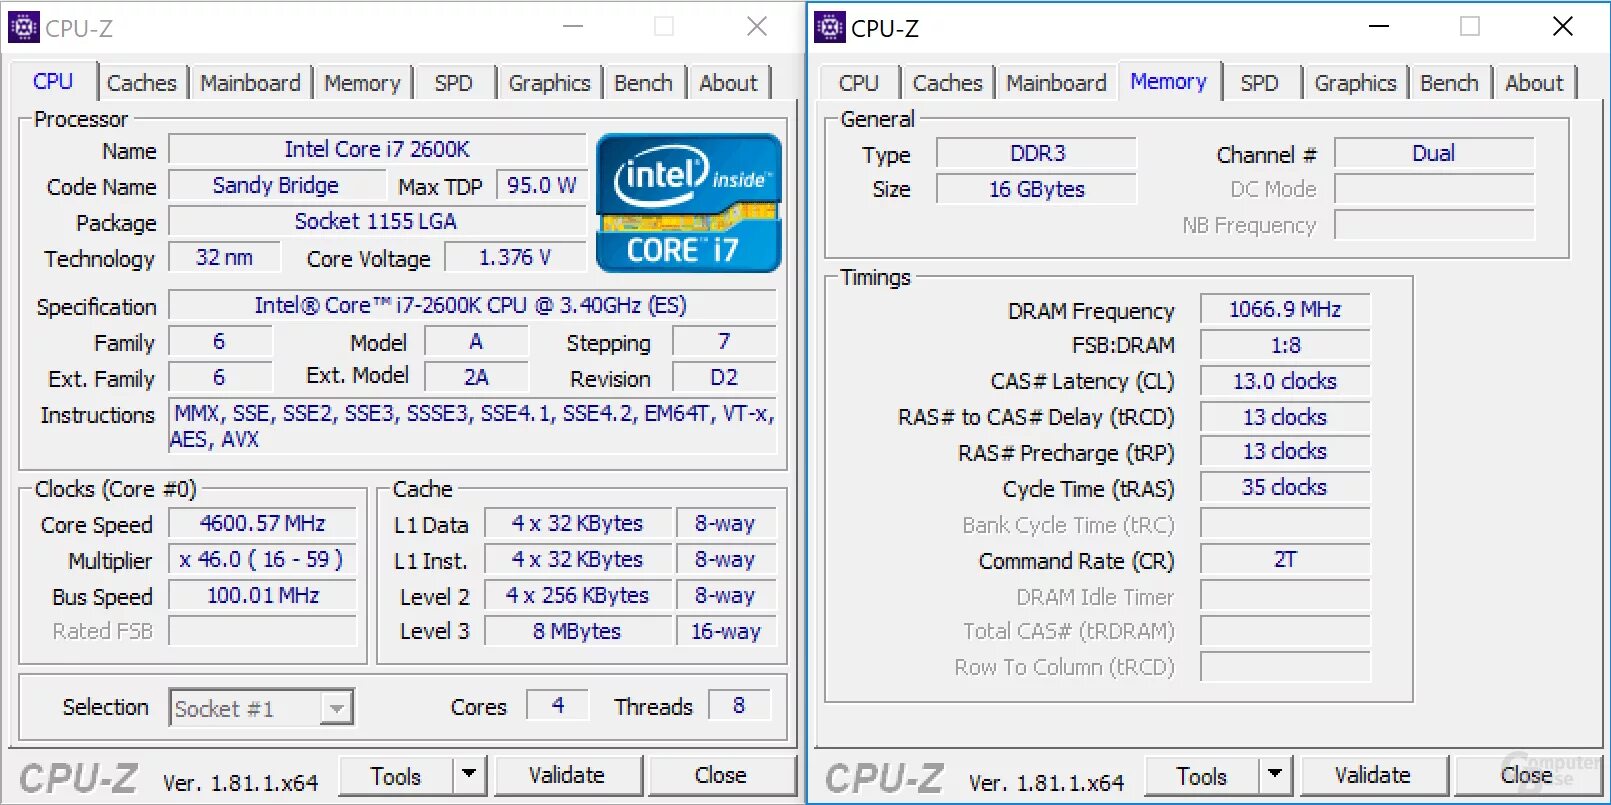 CPU-Z Core i3 2120. I5 3570 CPU Z. Core i5-12400 CPU-Z. I7 2600k CPU Z Benchmark. Intel i5 частота процессора